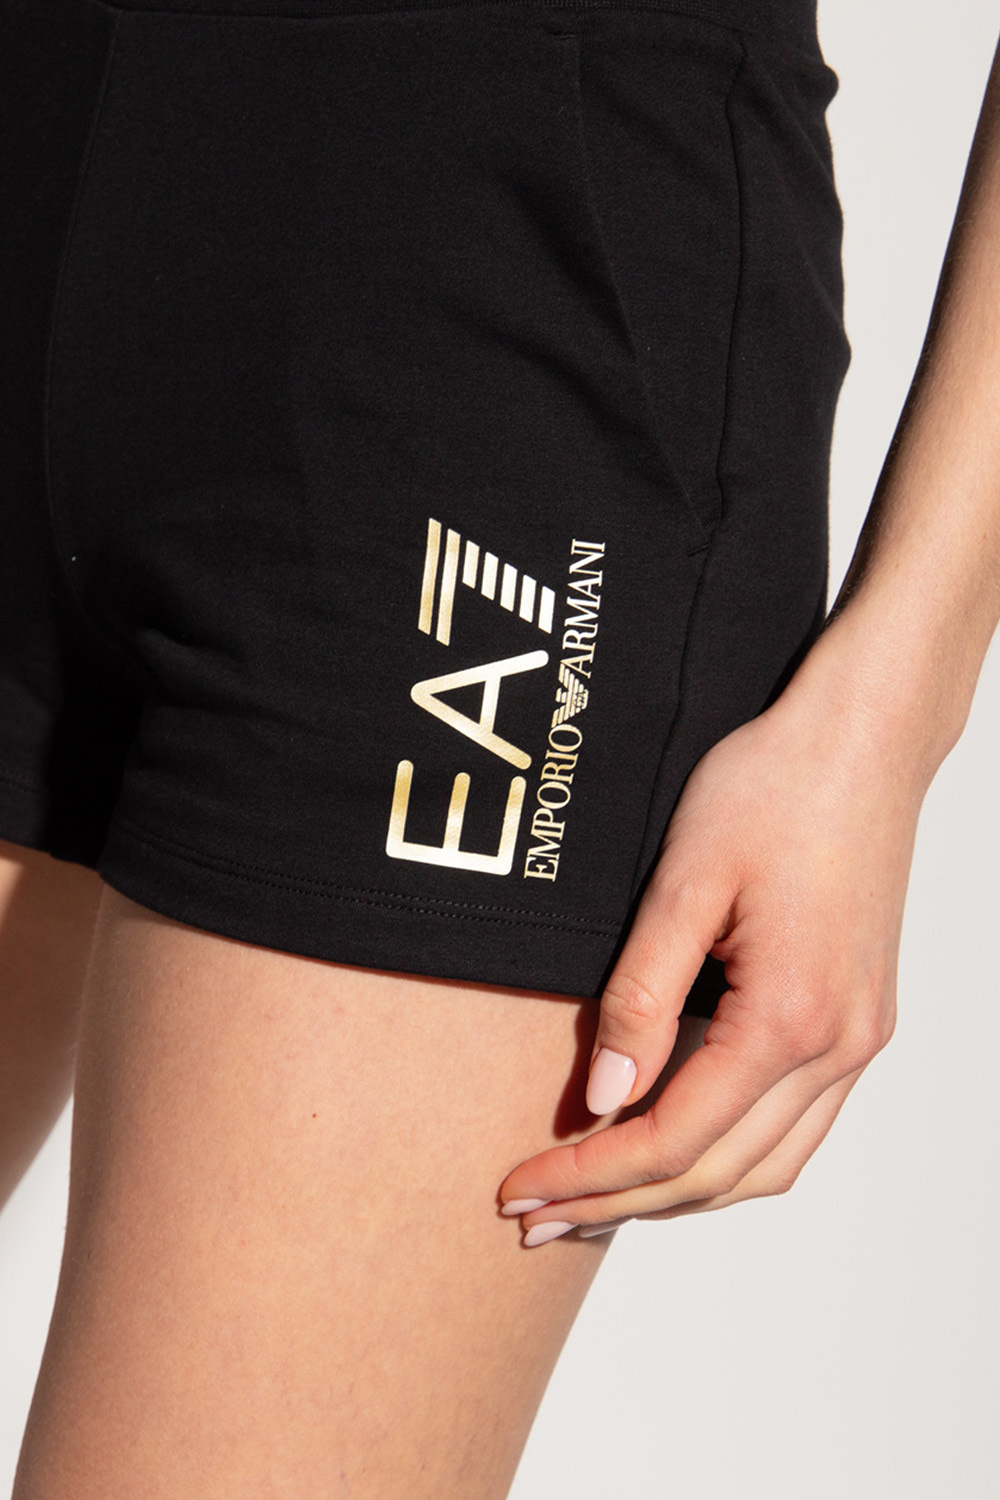 EA7 Emporio armani Giorgio Sports shorts with logo